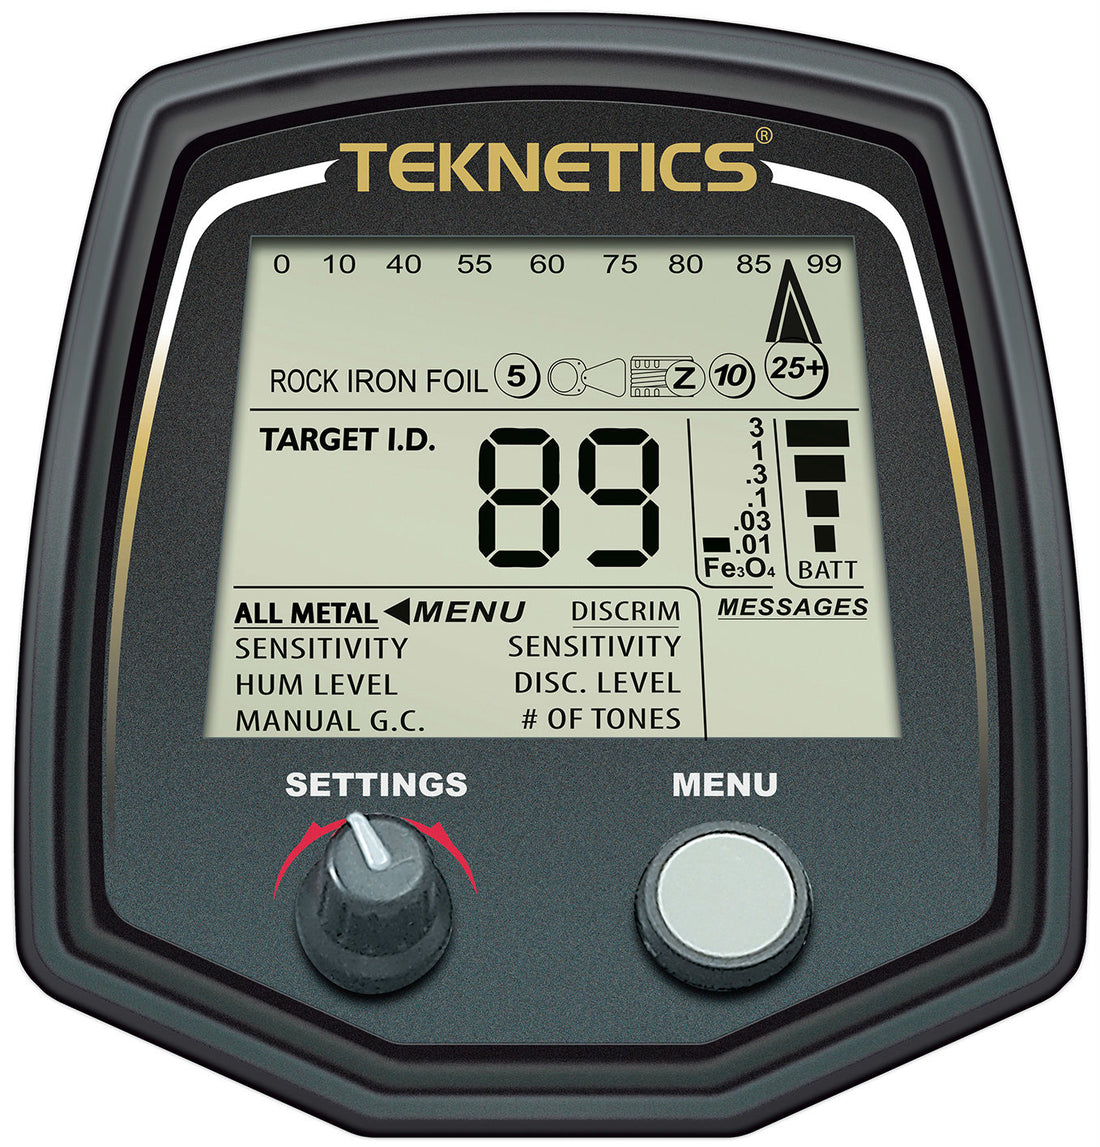 Teknetics T2 Classic Metal Detector with Waterproof 11" DD Coil + Bonus Pack